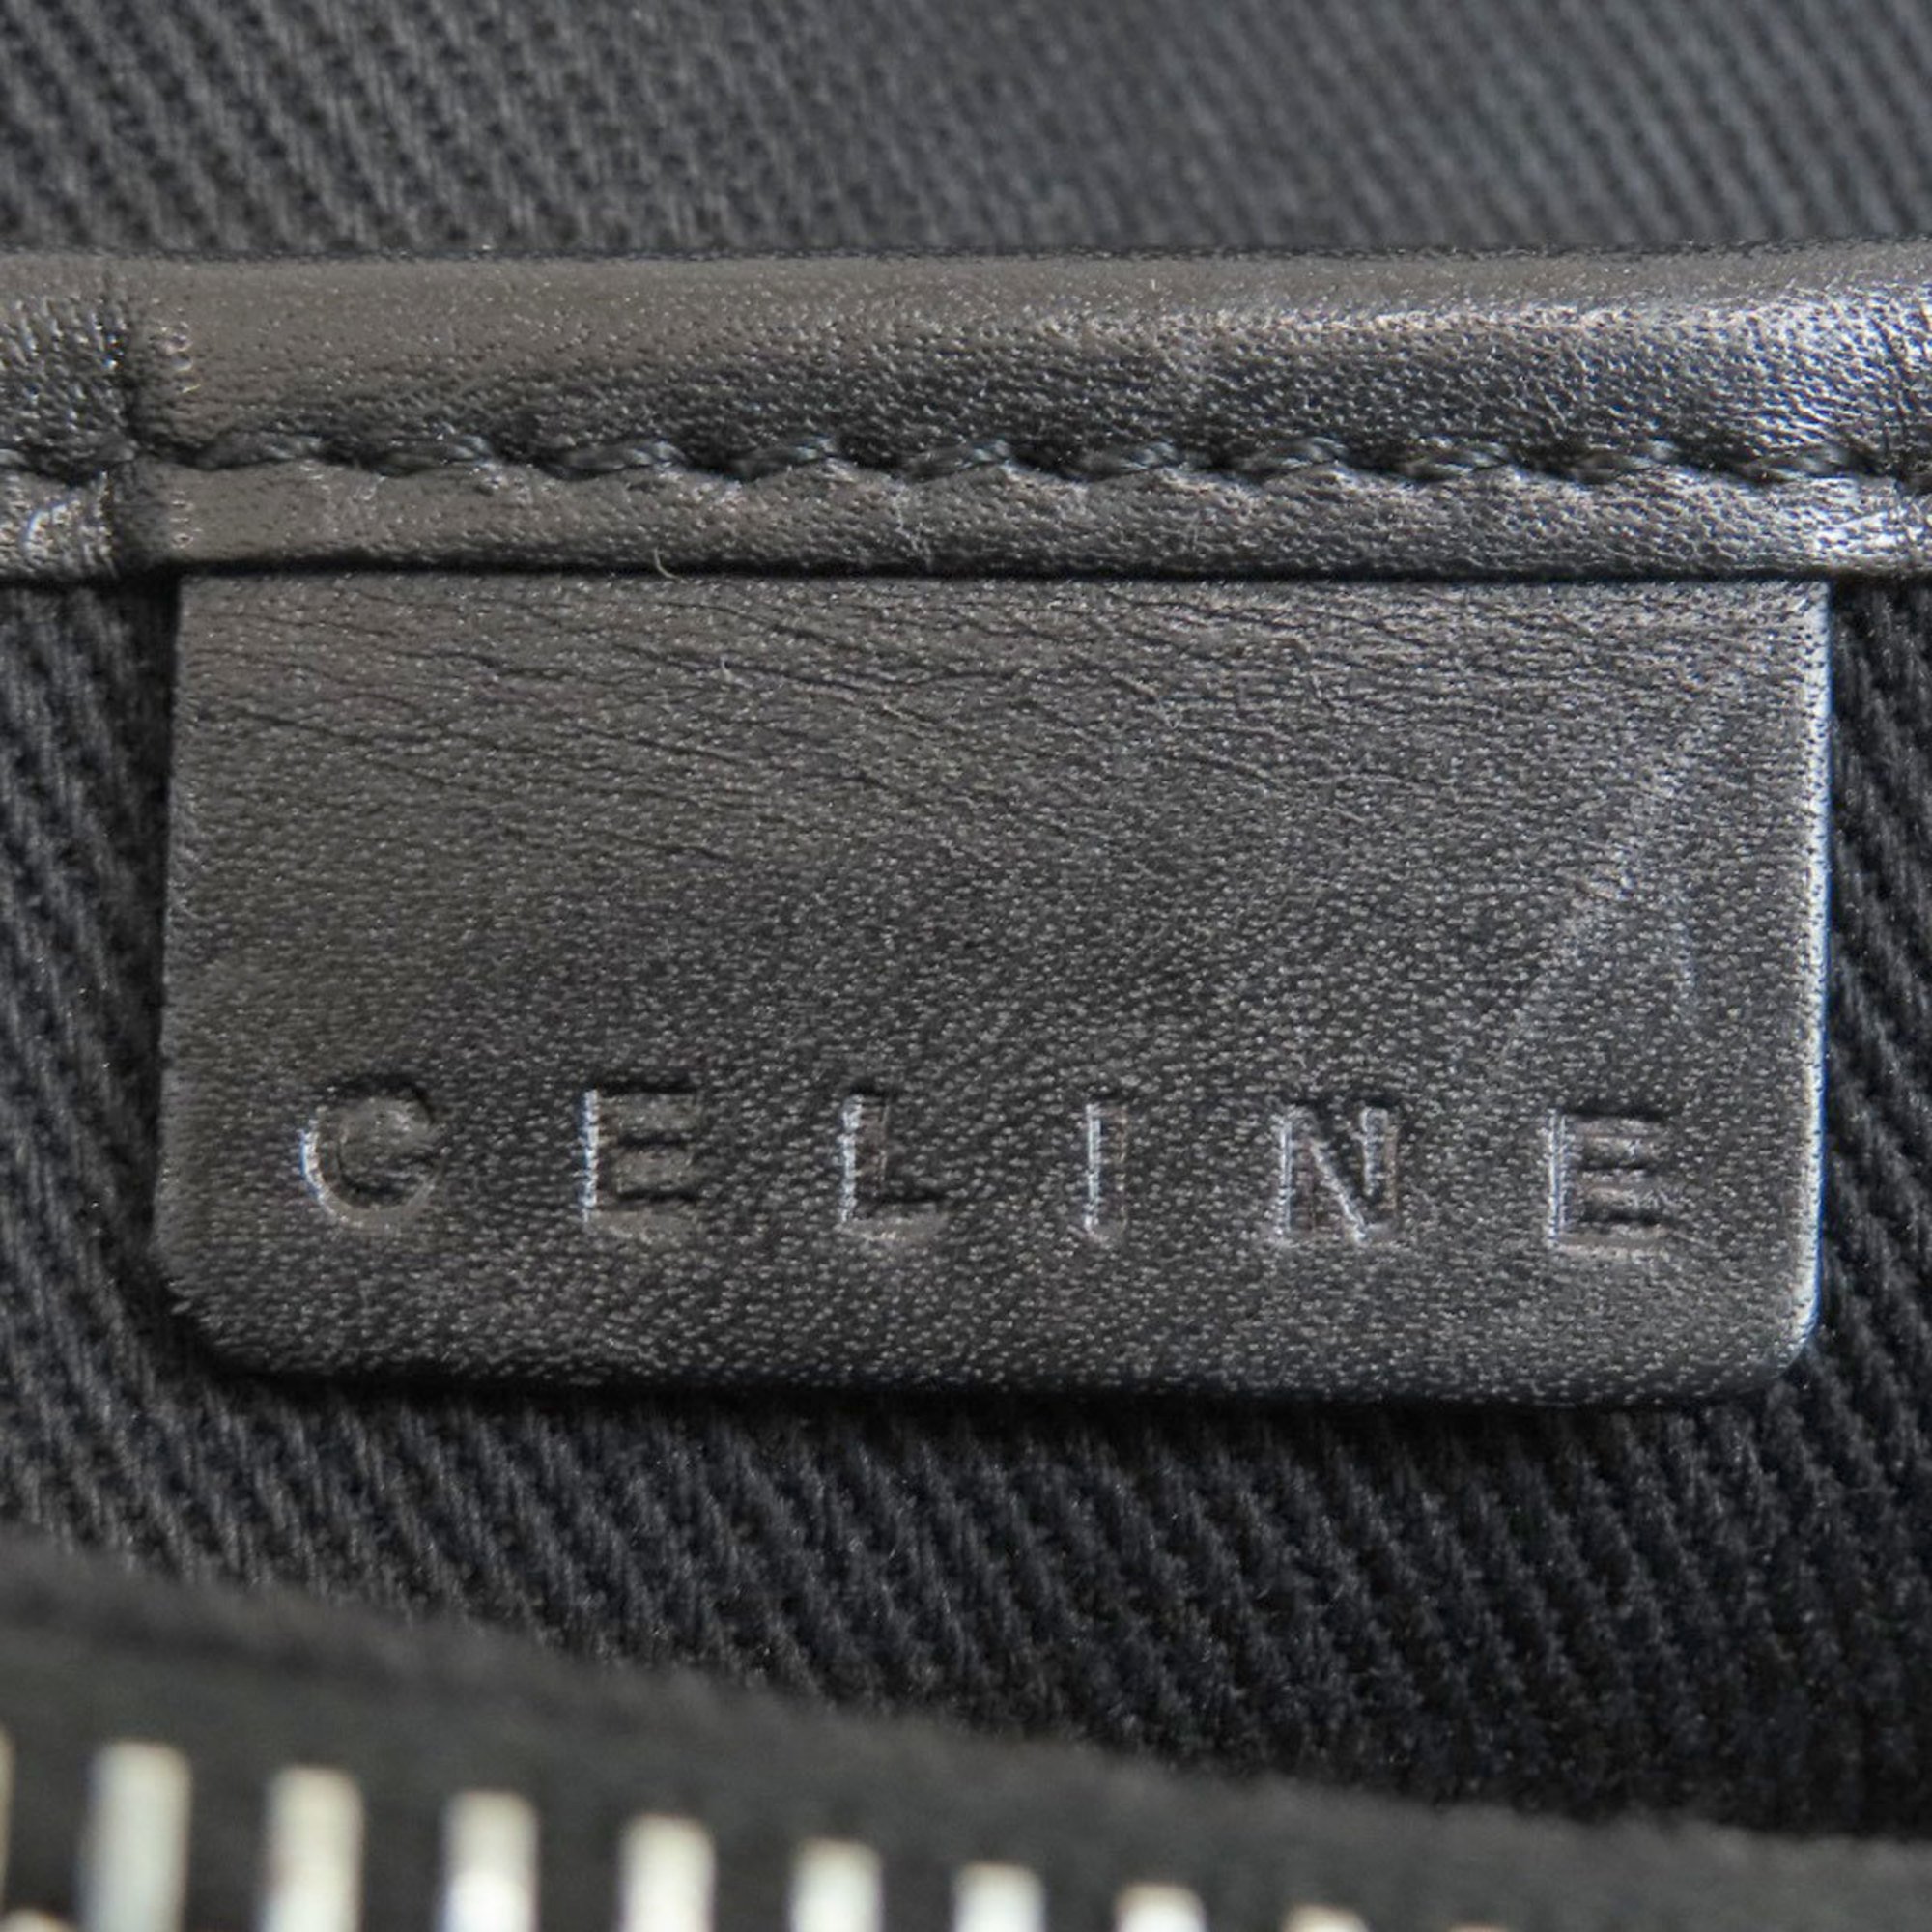 Celine C Macadam handbag, nylon material, women's